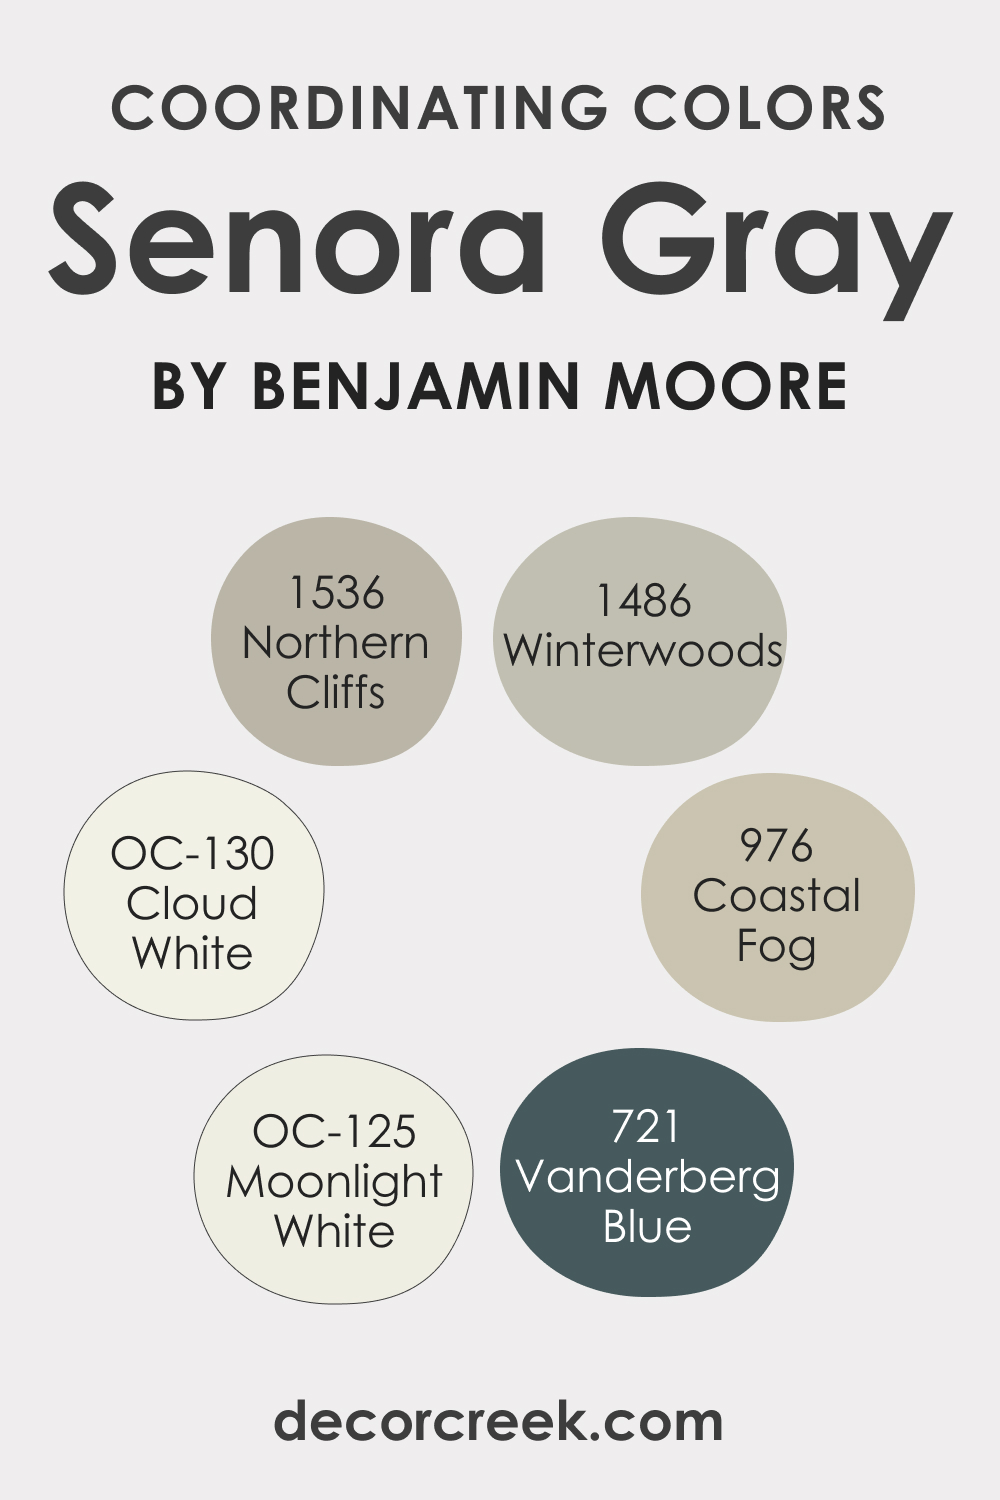 Coordinating Colors of Senora Gray 1530